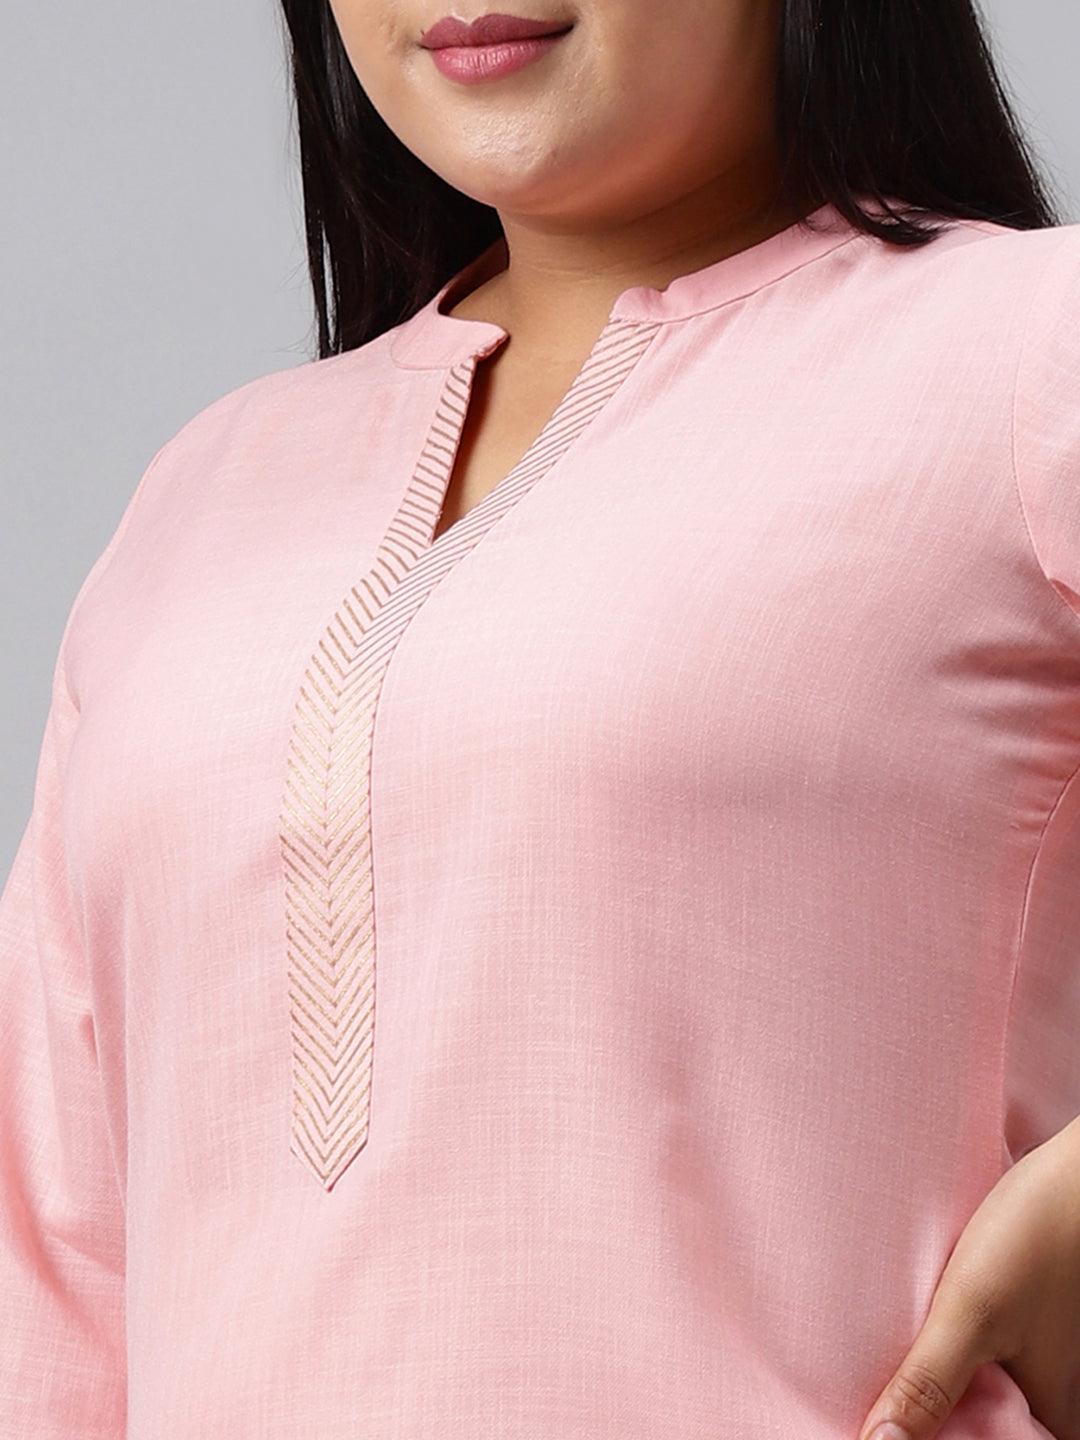 Plus Size Pink Solid Cotton Straight Kurta With Palazzos & Dupatta